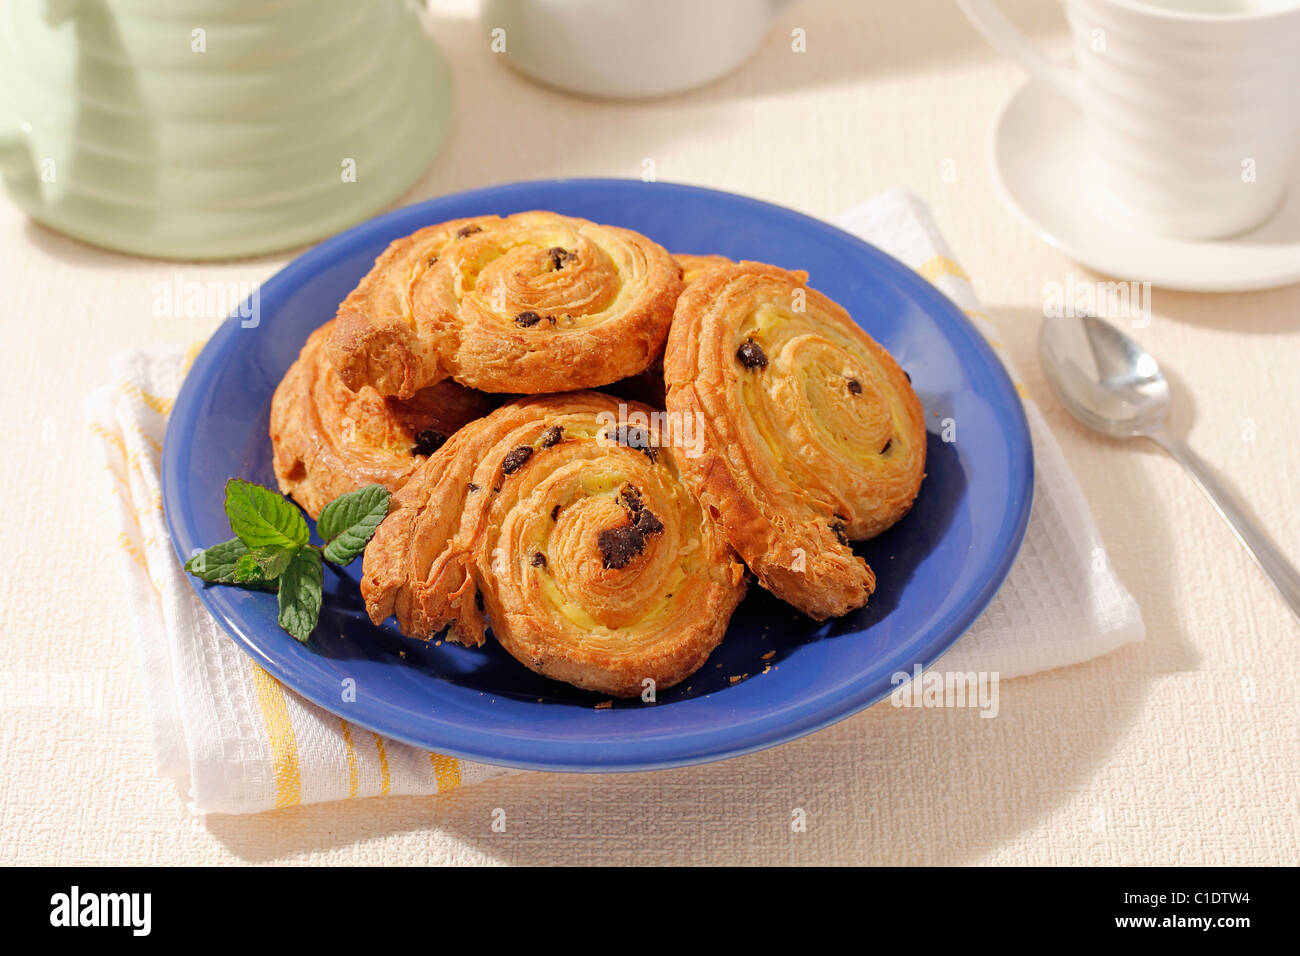 Mini schneckens with custard and raisins. Recipe available. Stock Photo